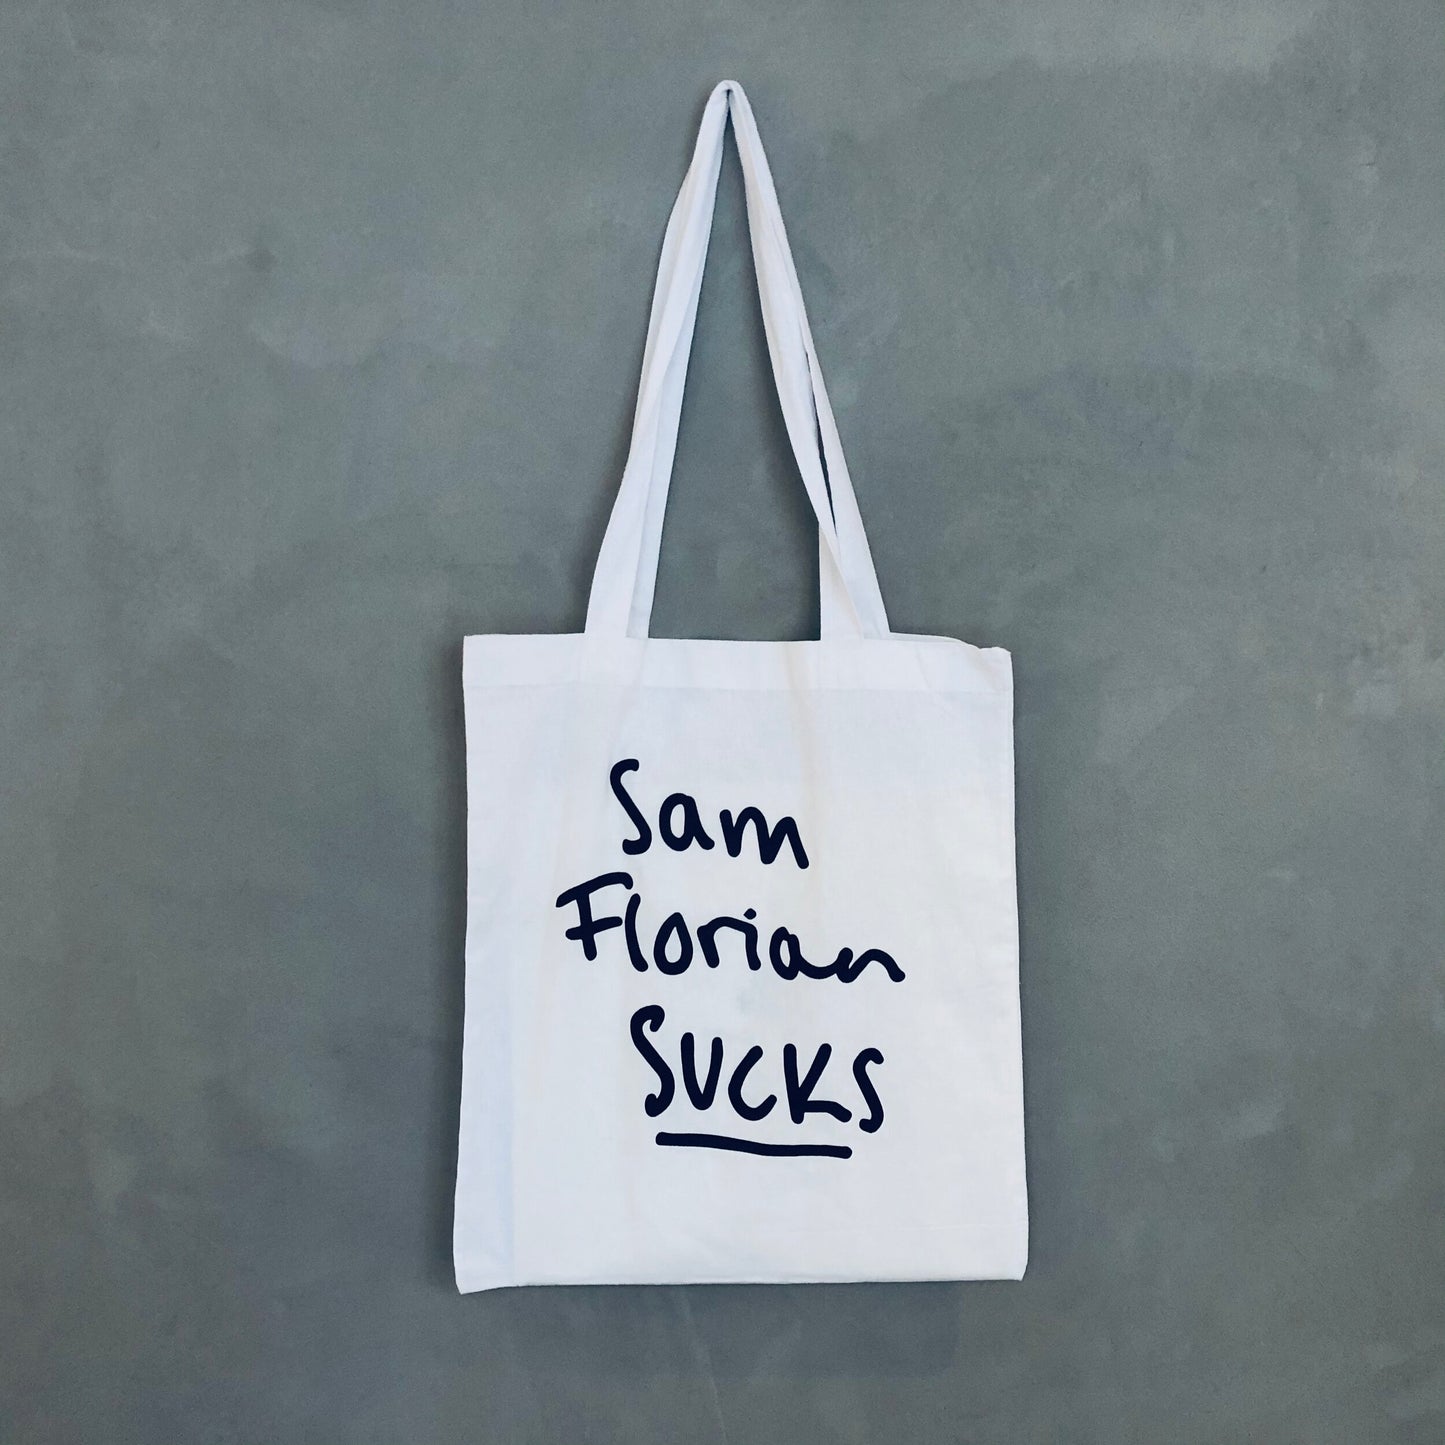 Sam Florian Sucks Tote bag